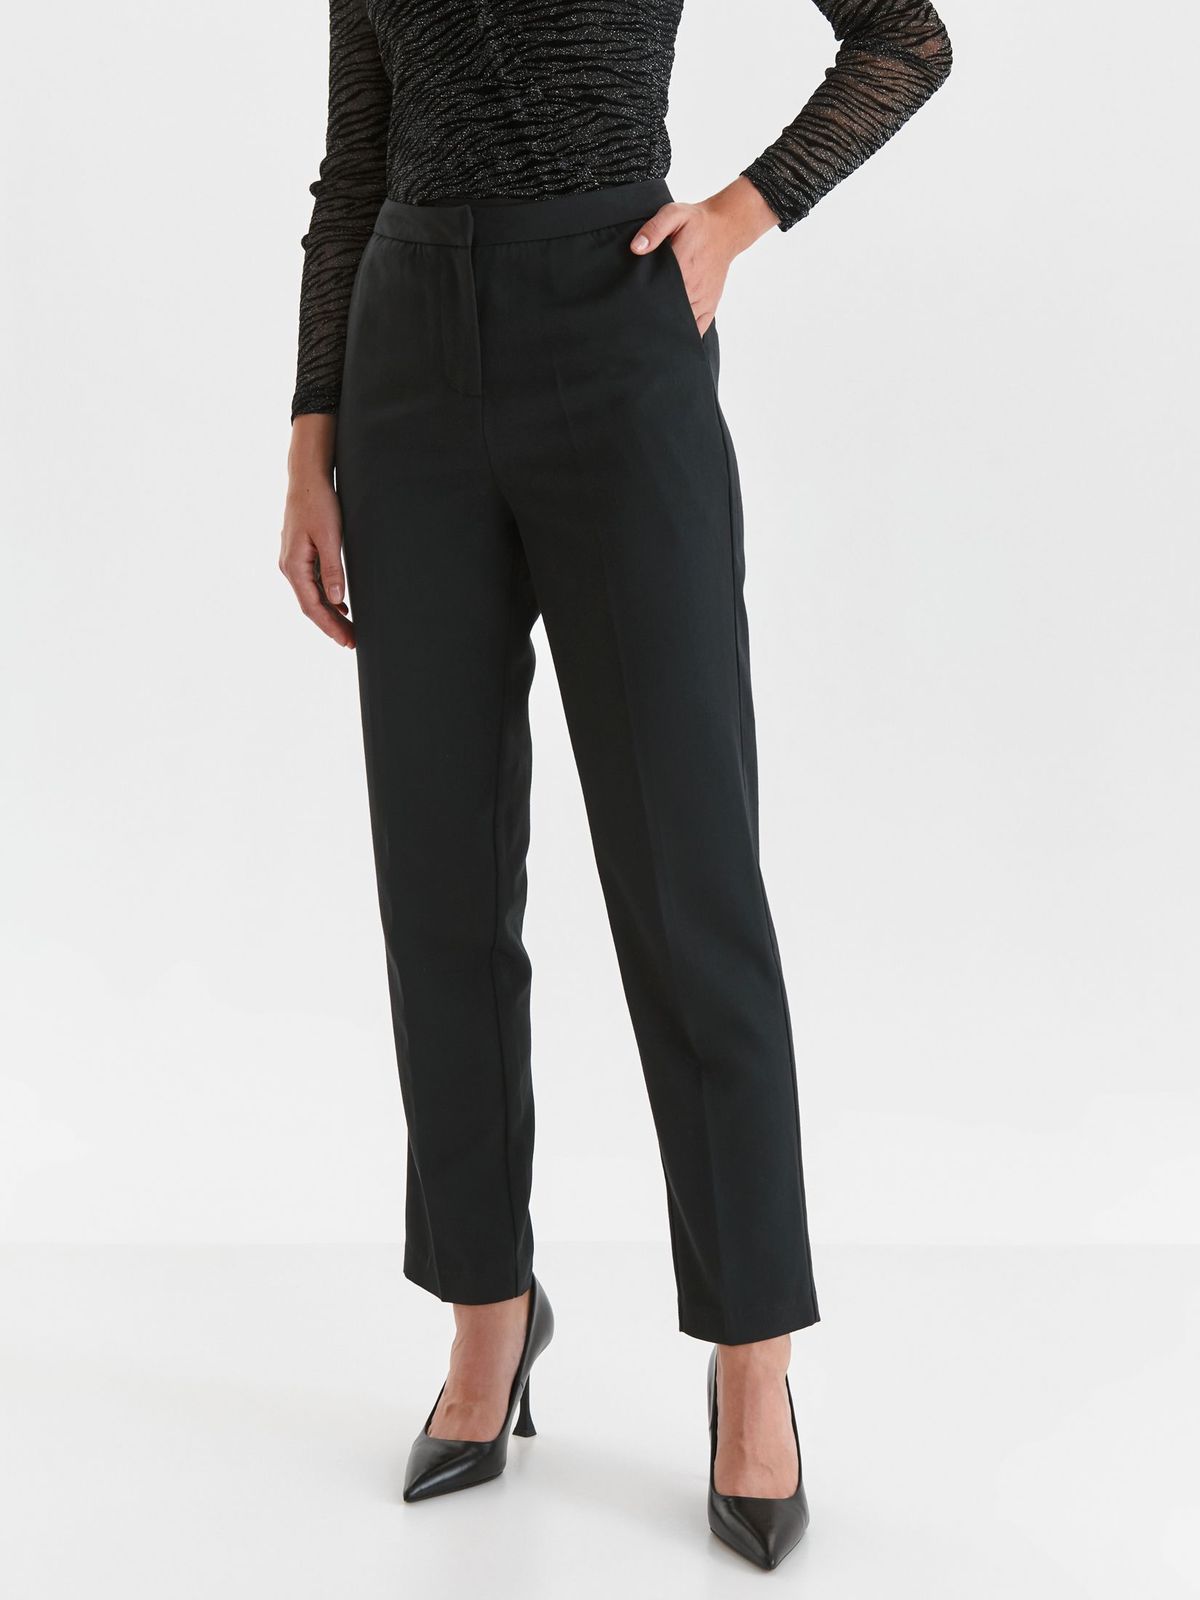 Black trousers slightly elastic fabric long straight